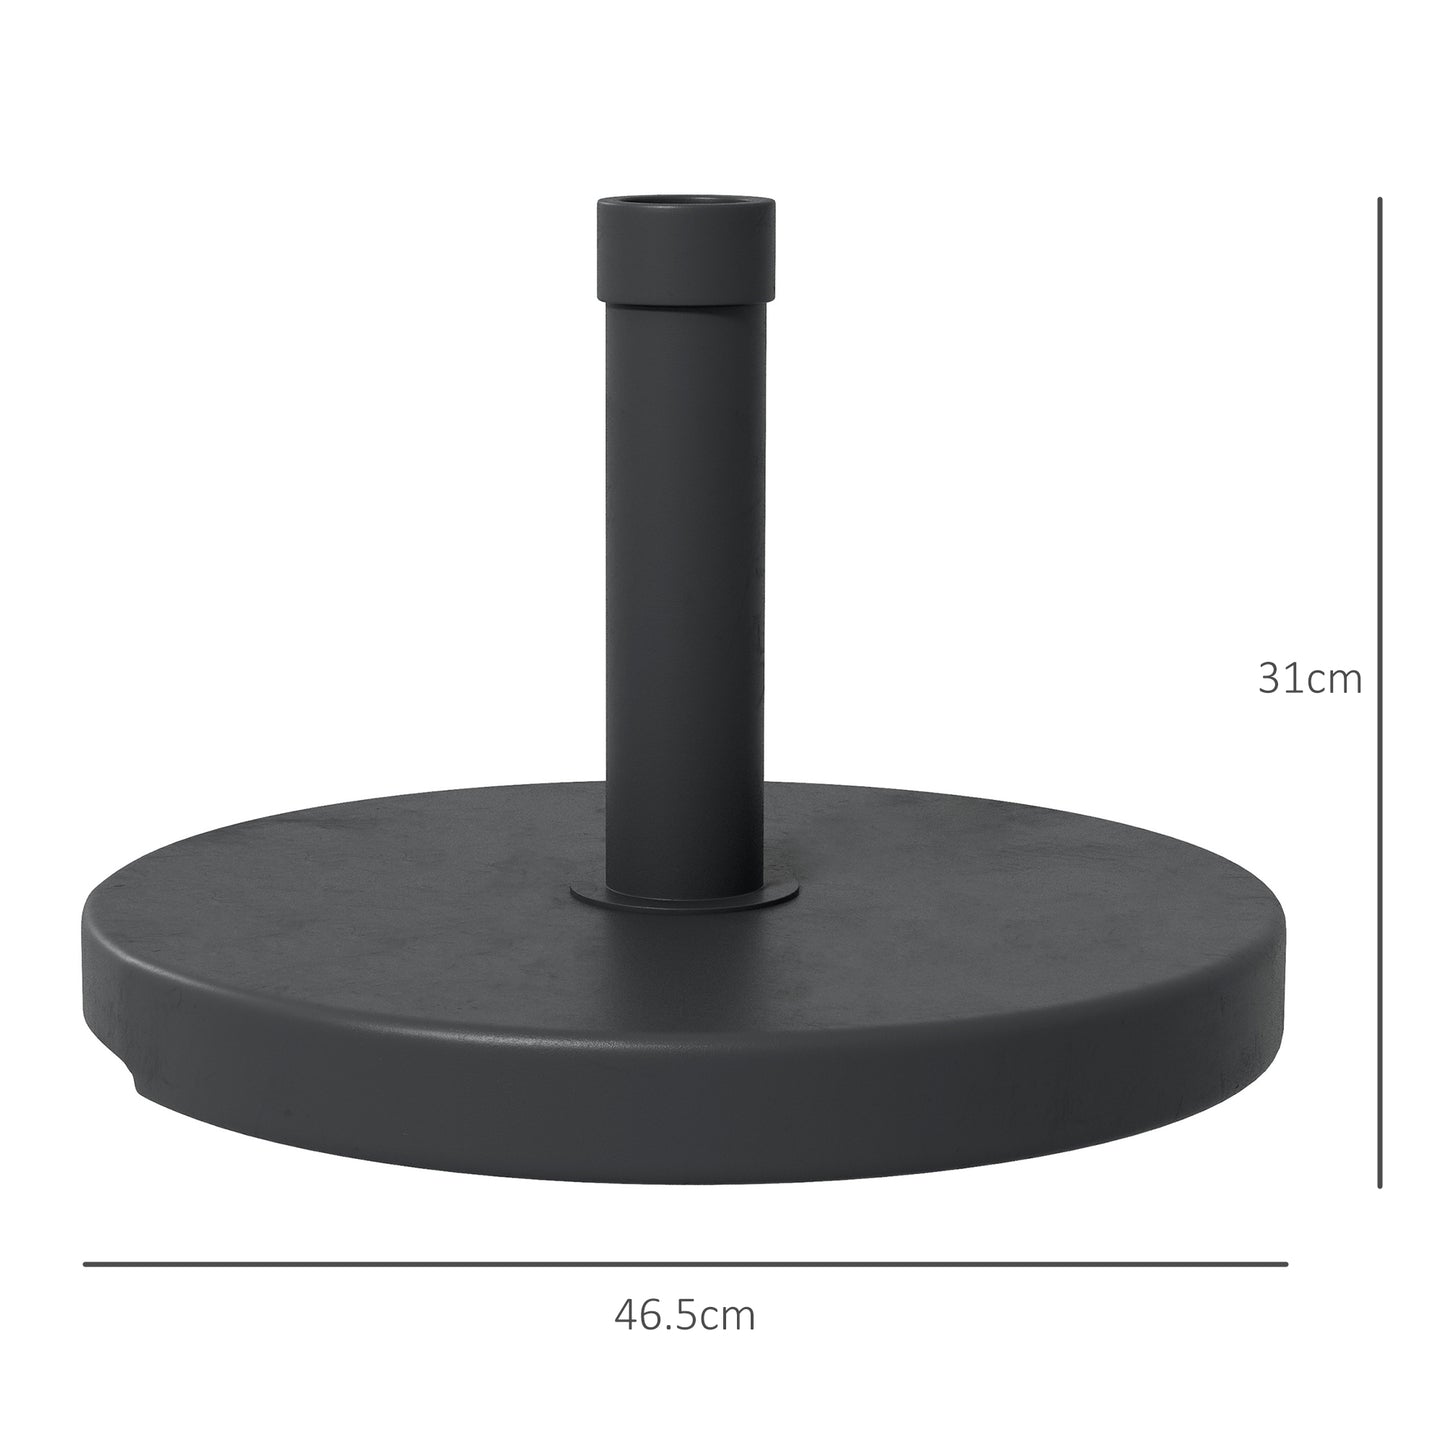 Outsunny 15kg Concrete Parasol Base: Heavy-Duty Rattan-Effect Stand for Outdoor Umbrellas, 46.5cm, Granite Grey